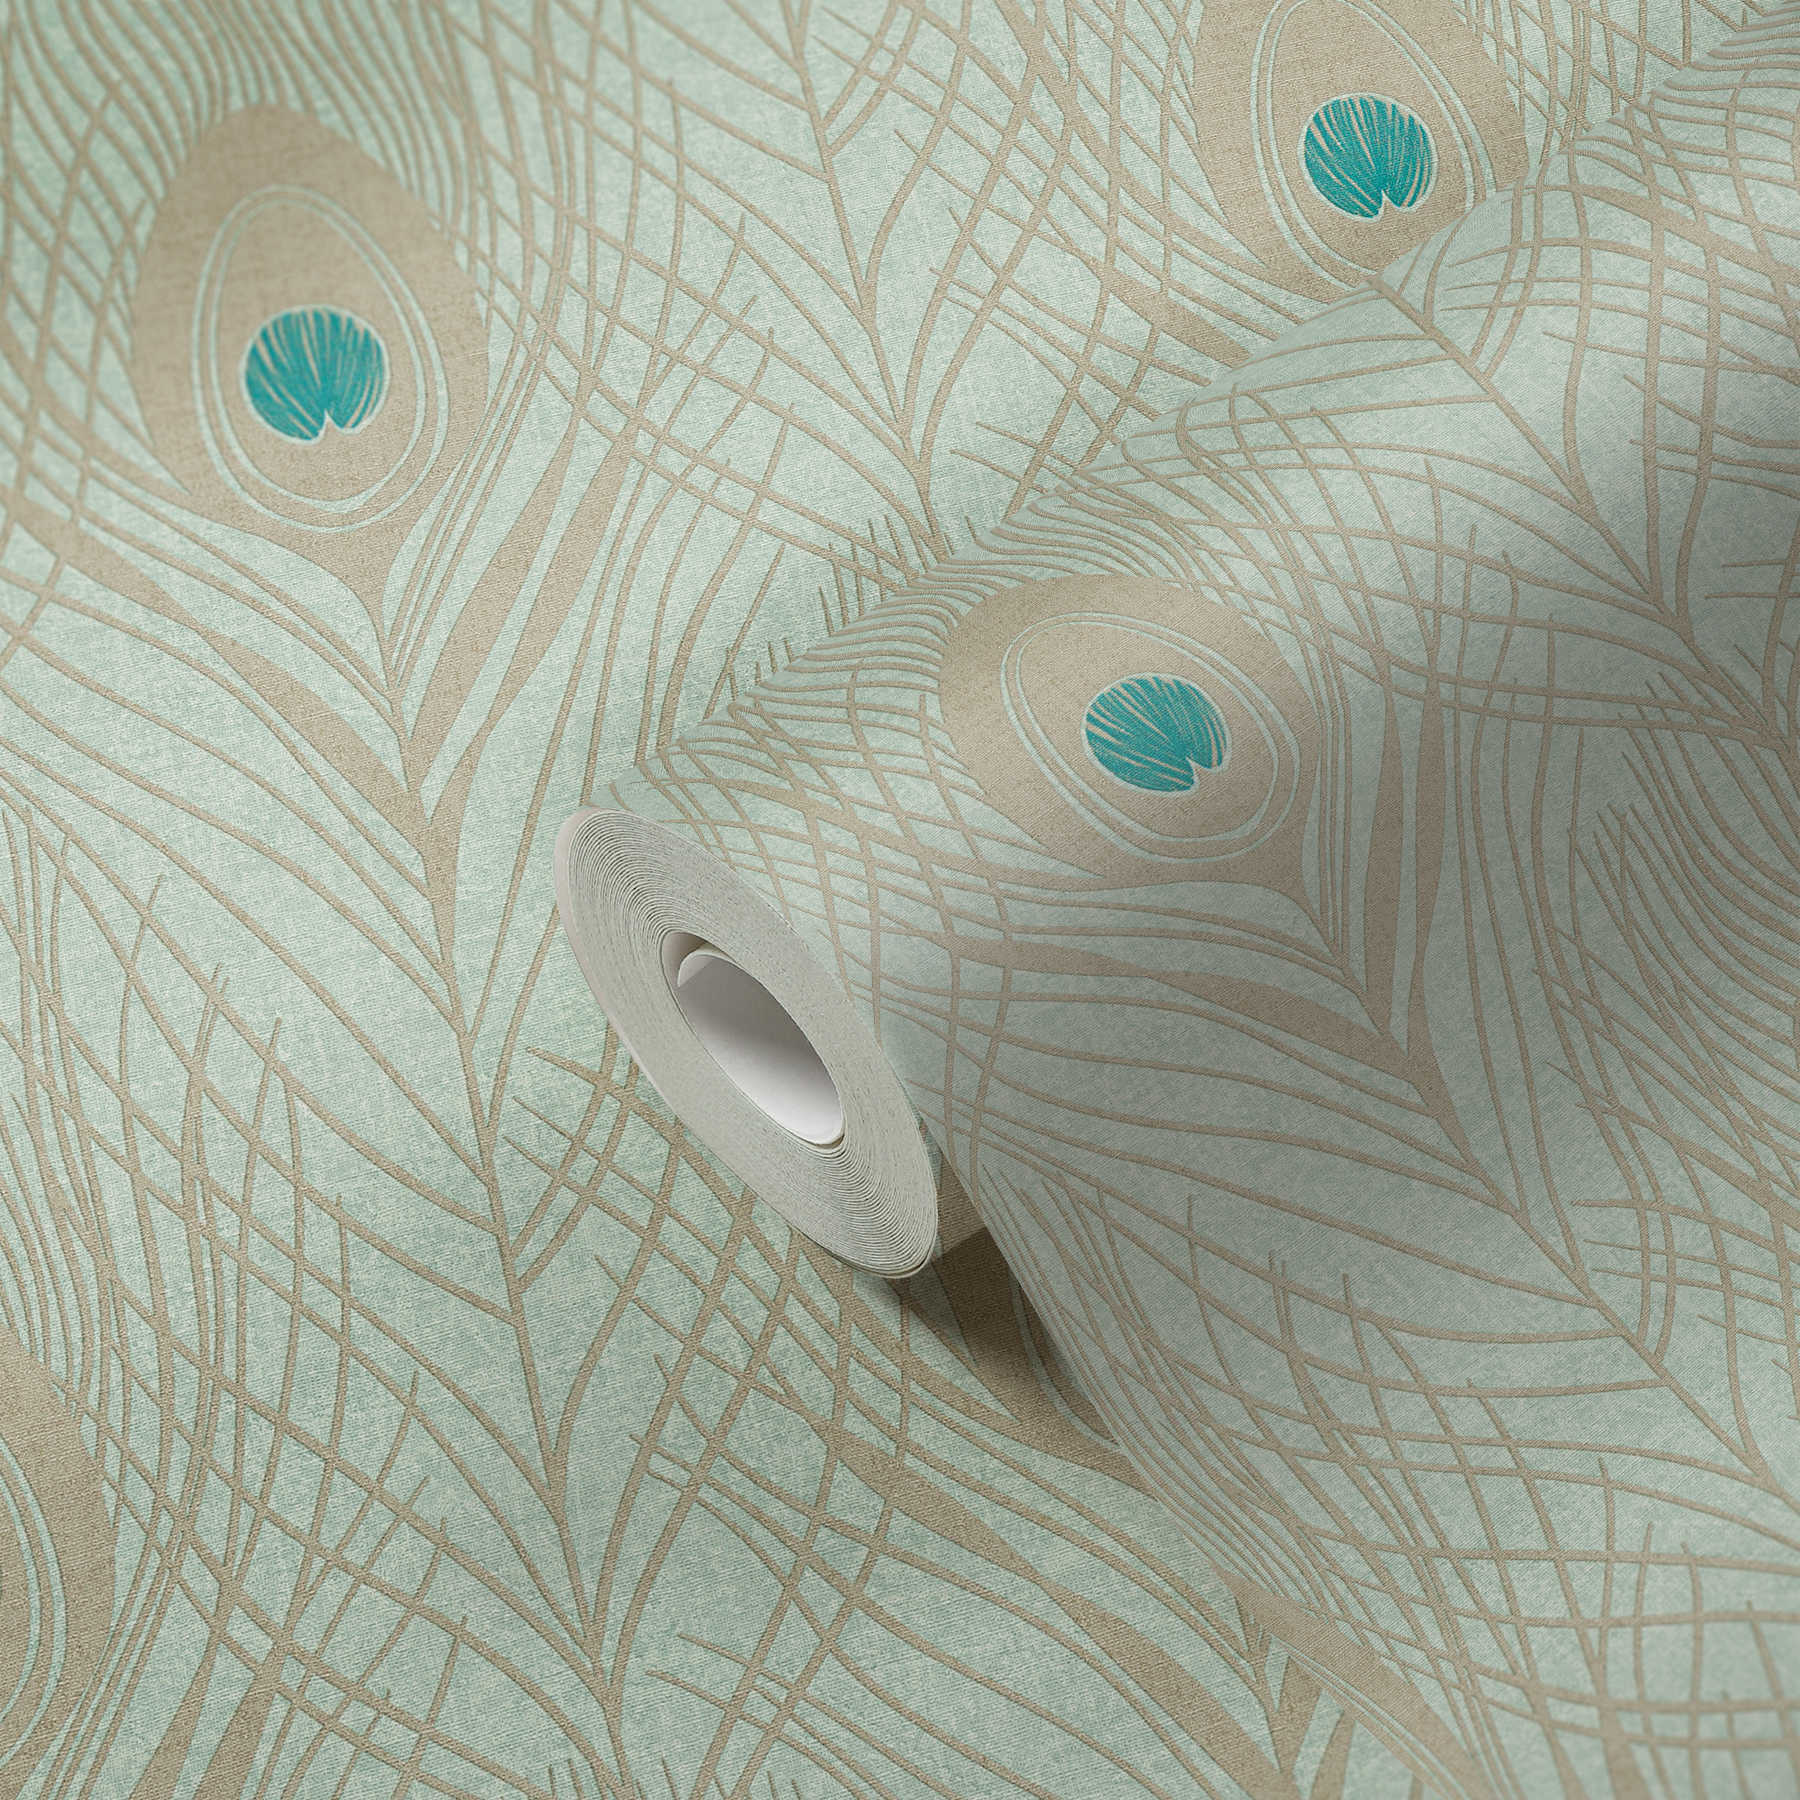             Papier peint intissé vert clair plumes de paon, aspect métallique - vert, bleu, or
        